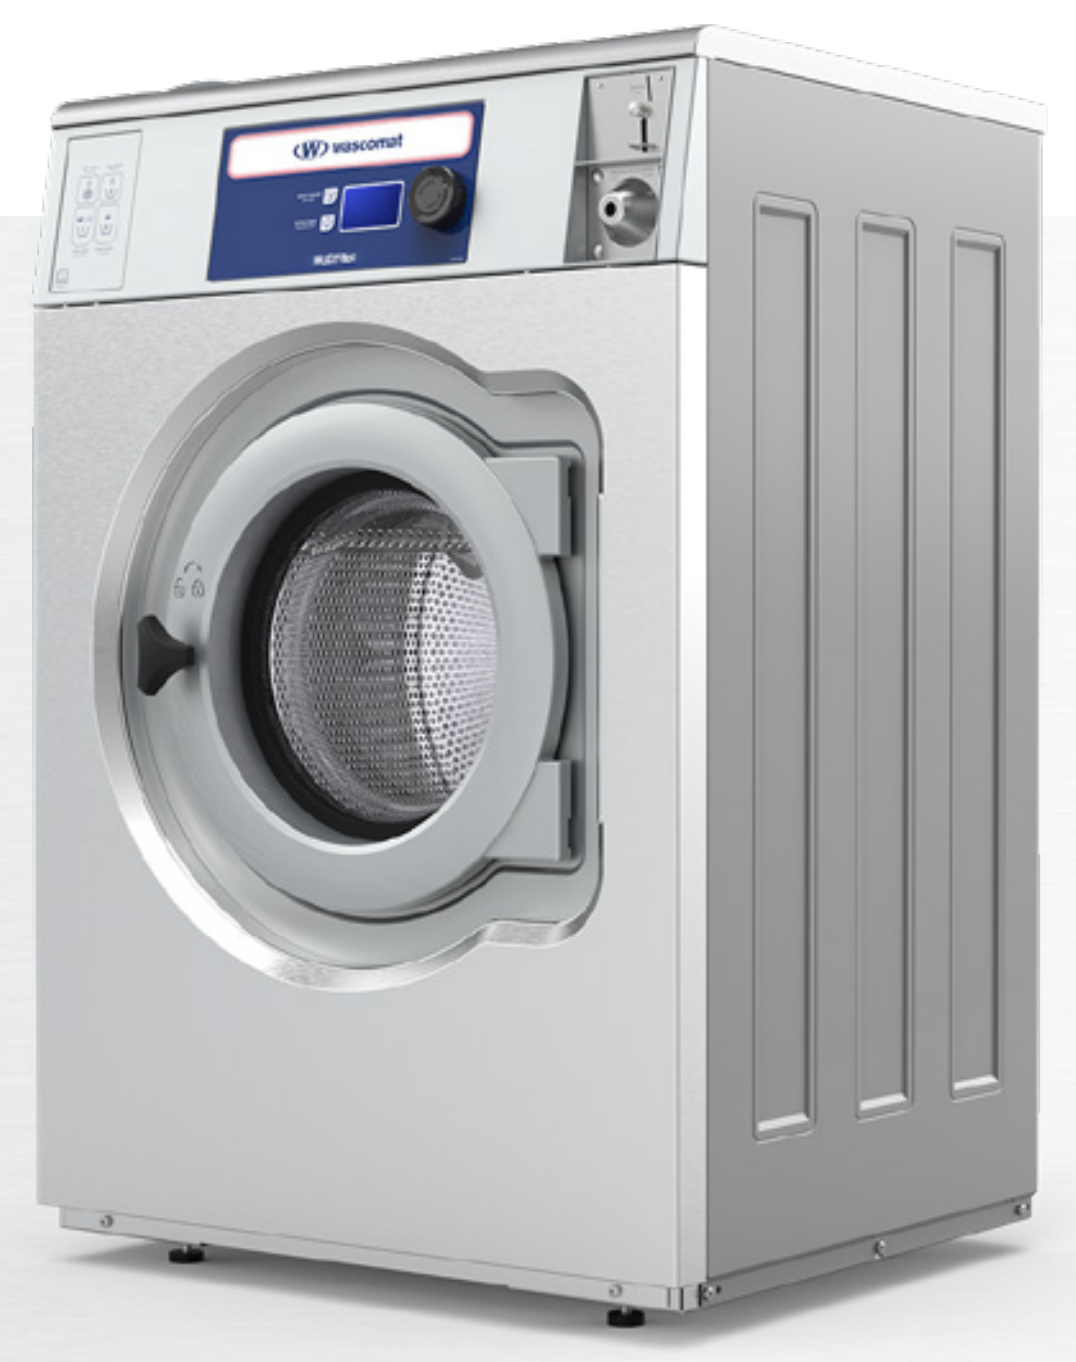 New 2022 Wascomat Wud725 - Automatic Laundry Service Of Va, Inc.